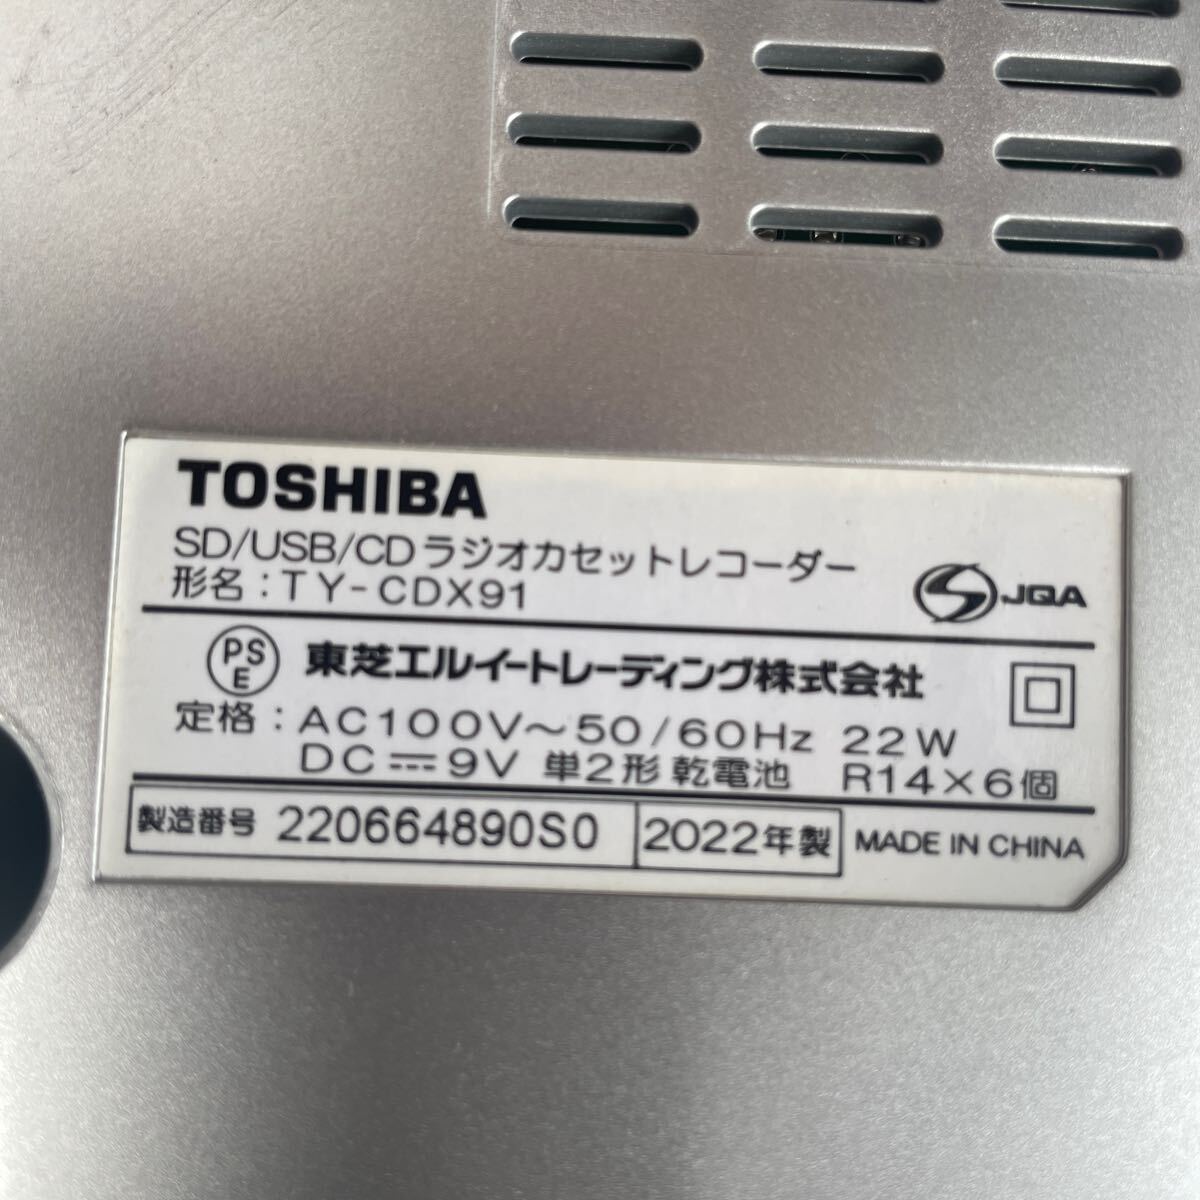 TOSHIBA Toshiba SD/USB/CD radio cassette recorder TY-CDX91 2022 year made 